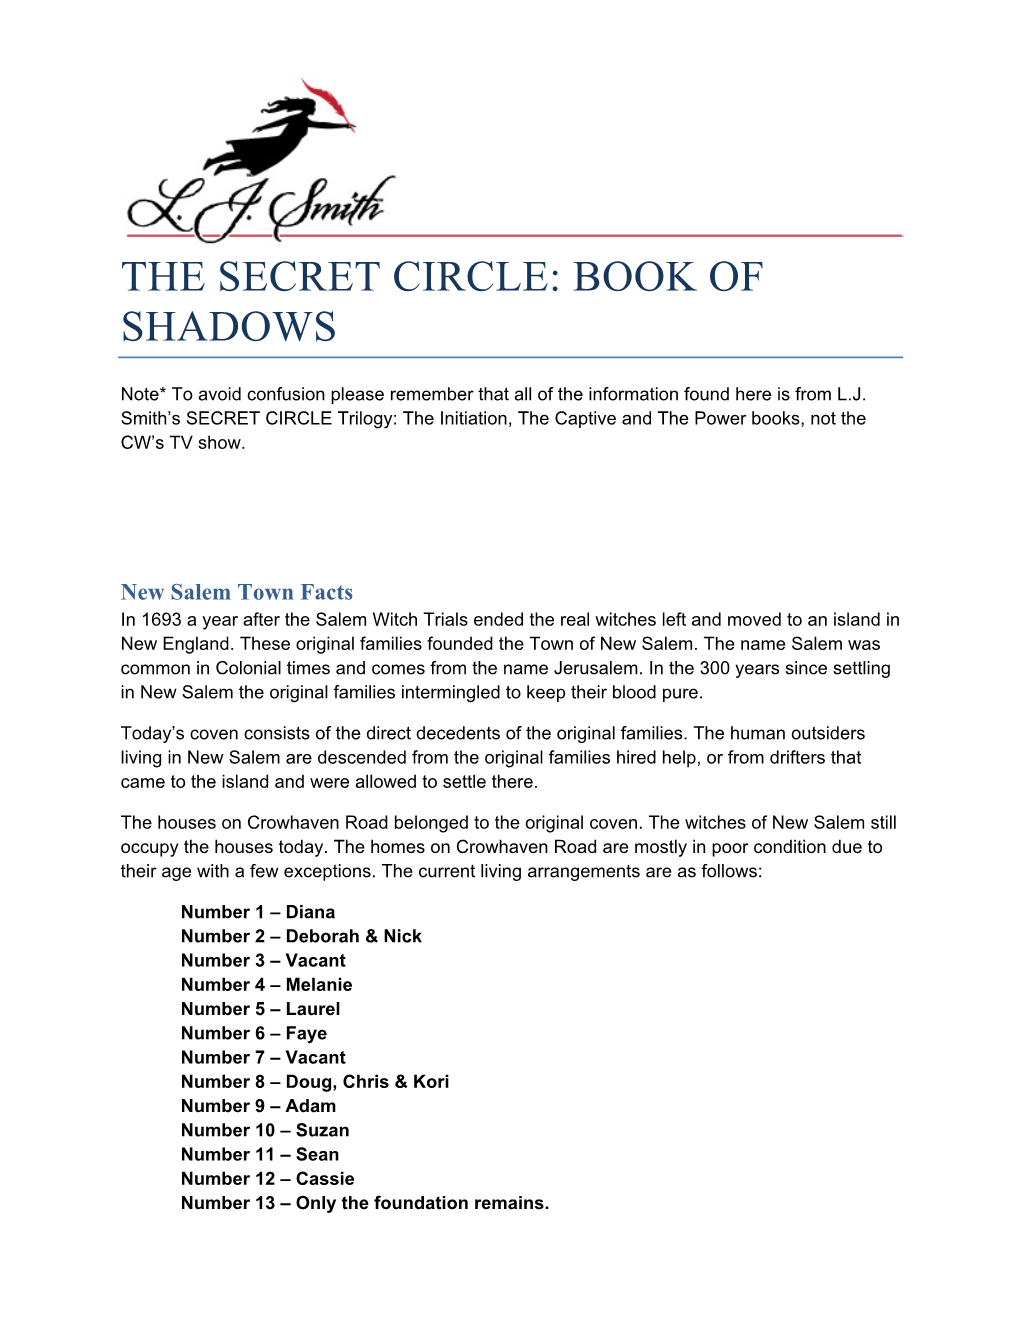 gerald gardner book of shadows pdf